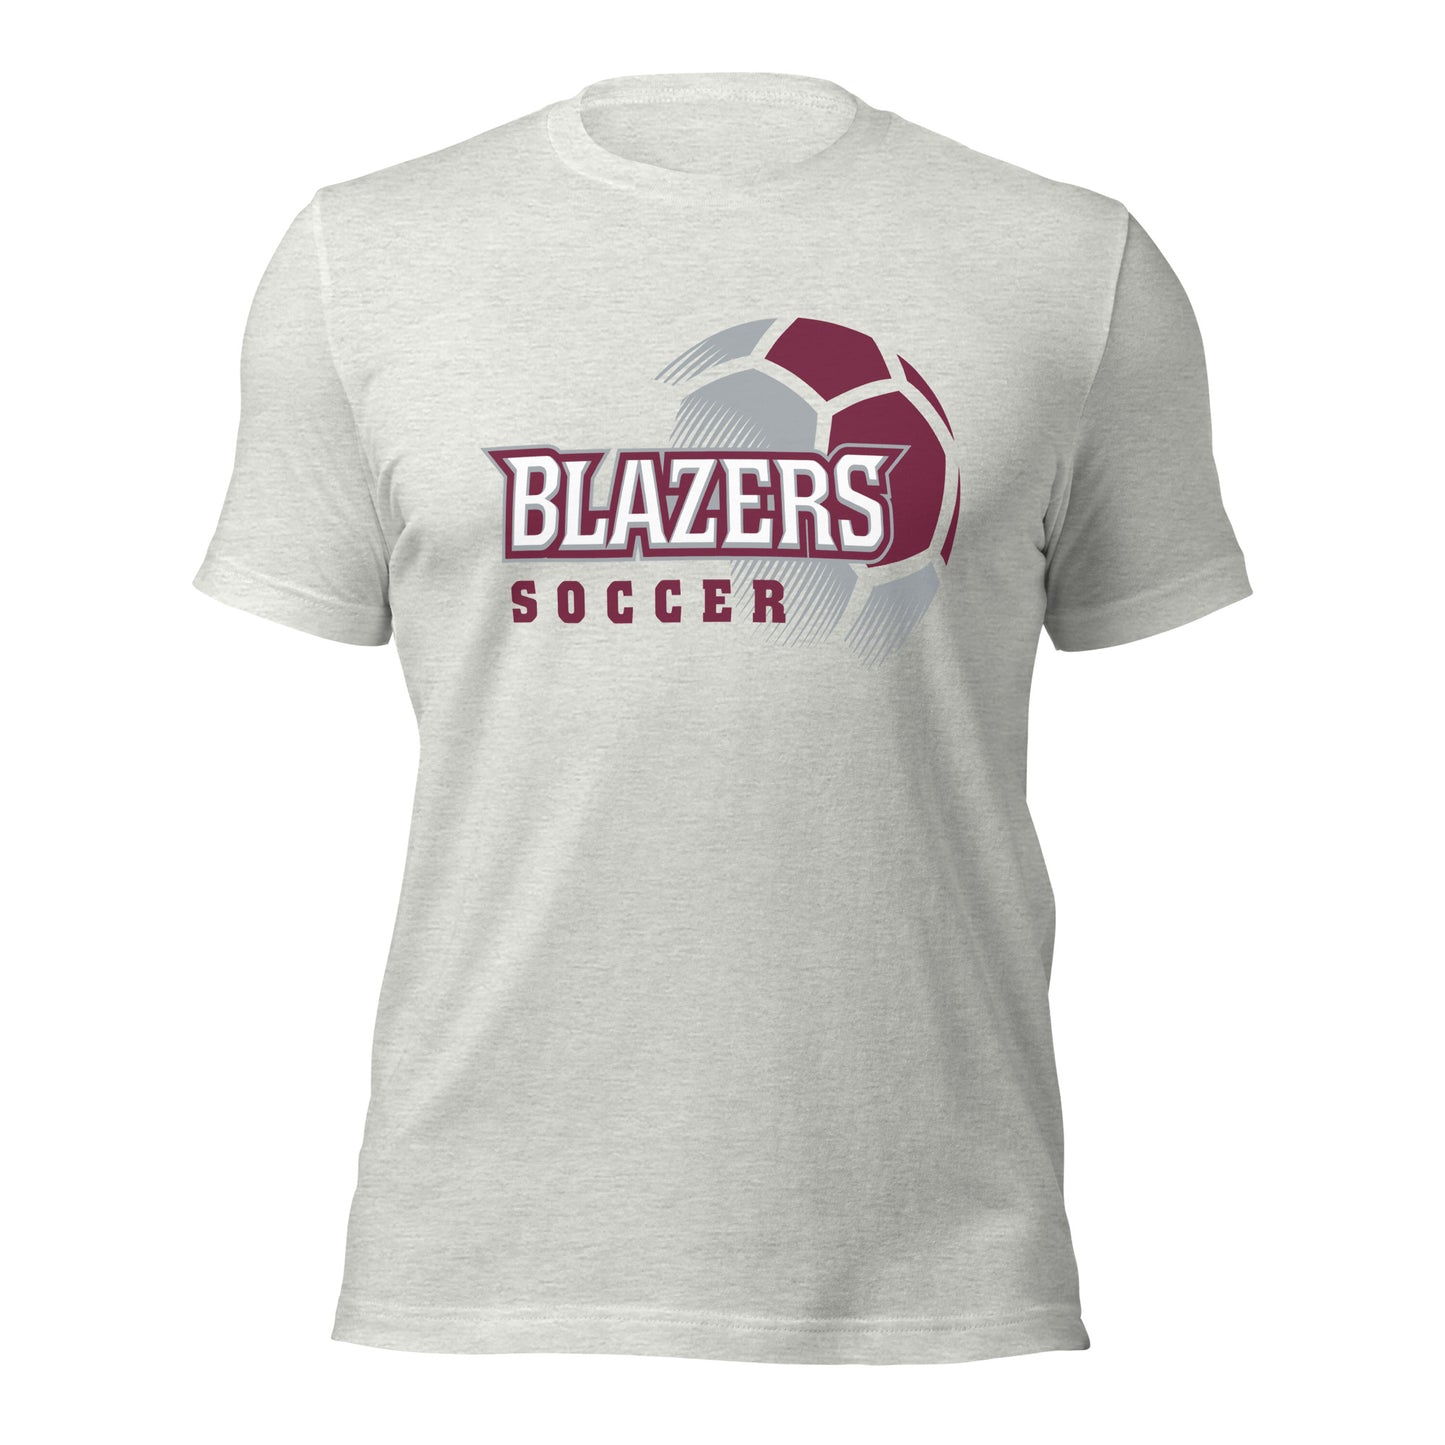 Blazers Soccer Unisex Short-Sleeve T-Shirt Light Colors Second Design